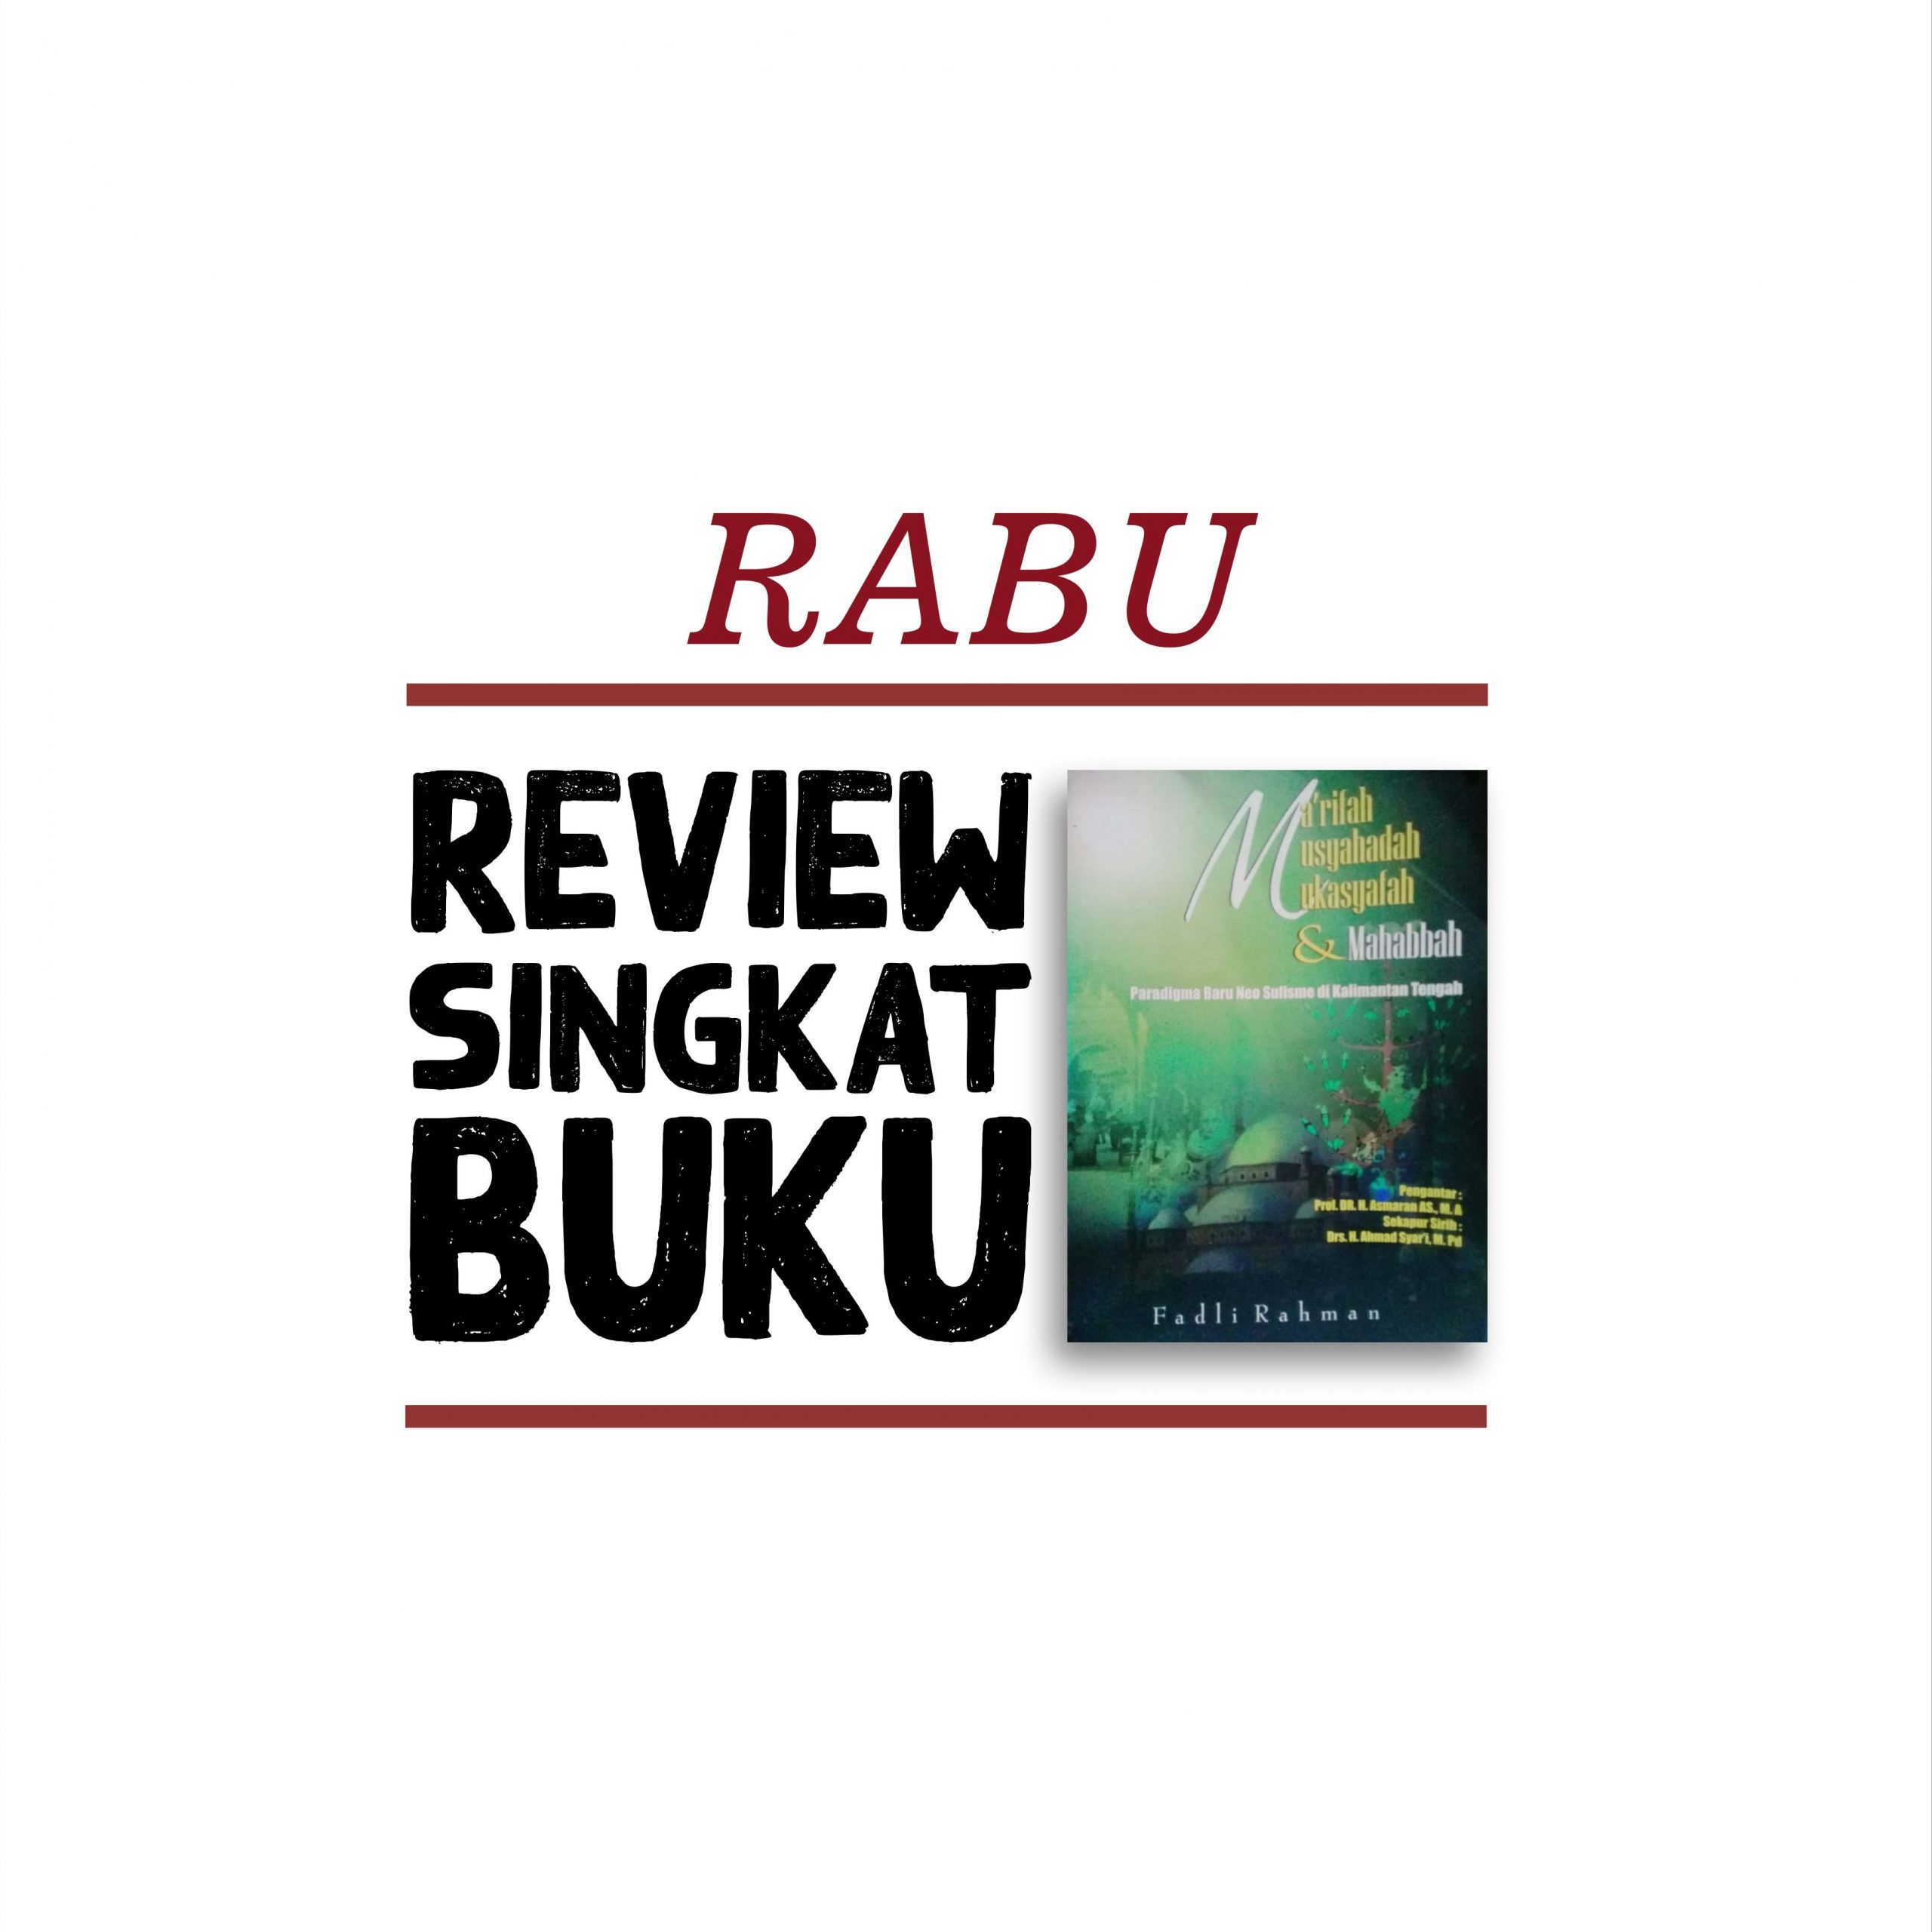 RABU: Ma’rifah, Musyahadah, Mukasyafah & Mahabbah (Paradigma Baru Neo Sufisme di Kalimantan Tengah)